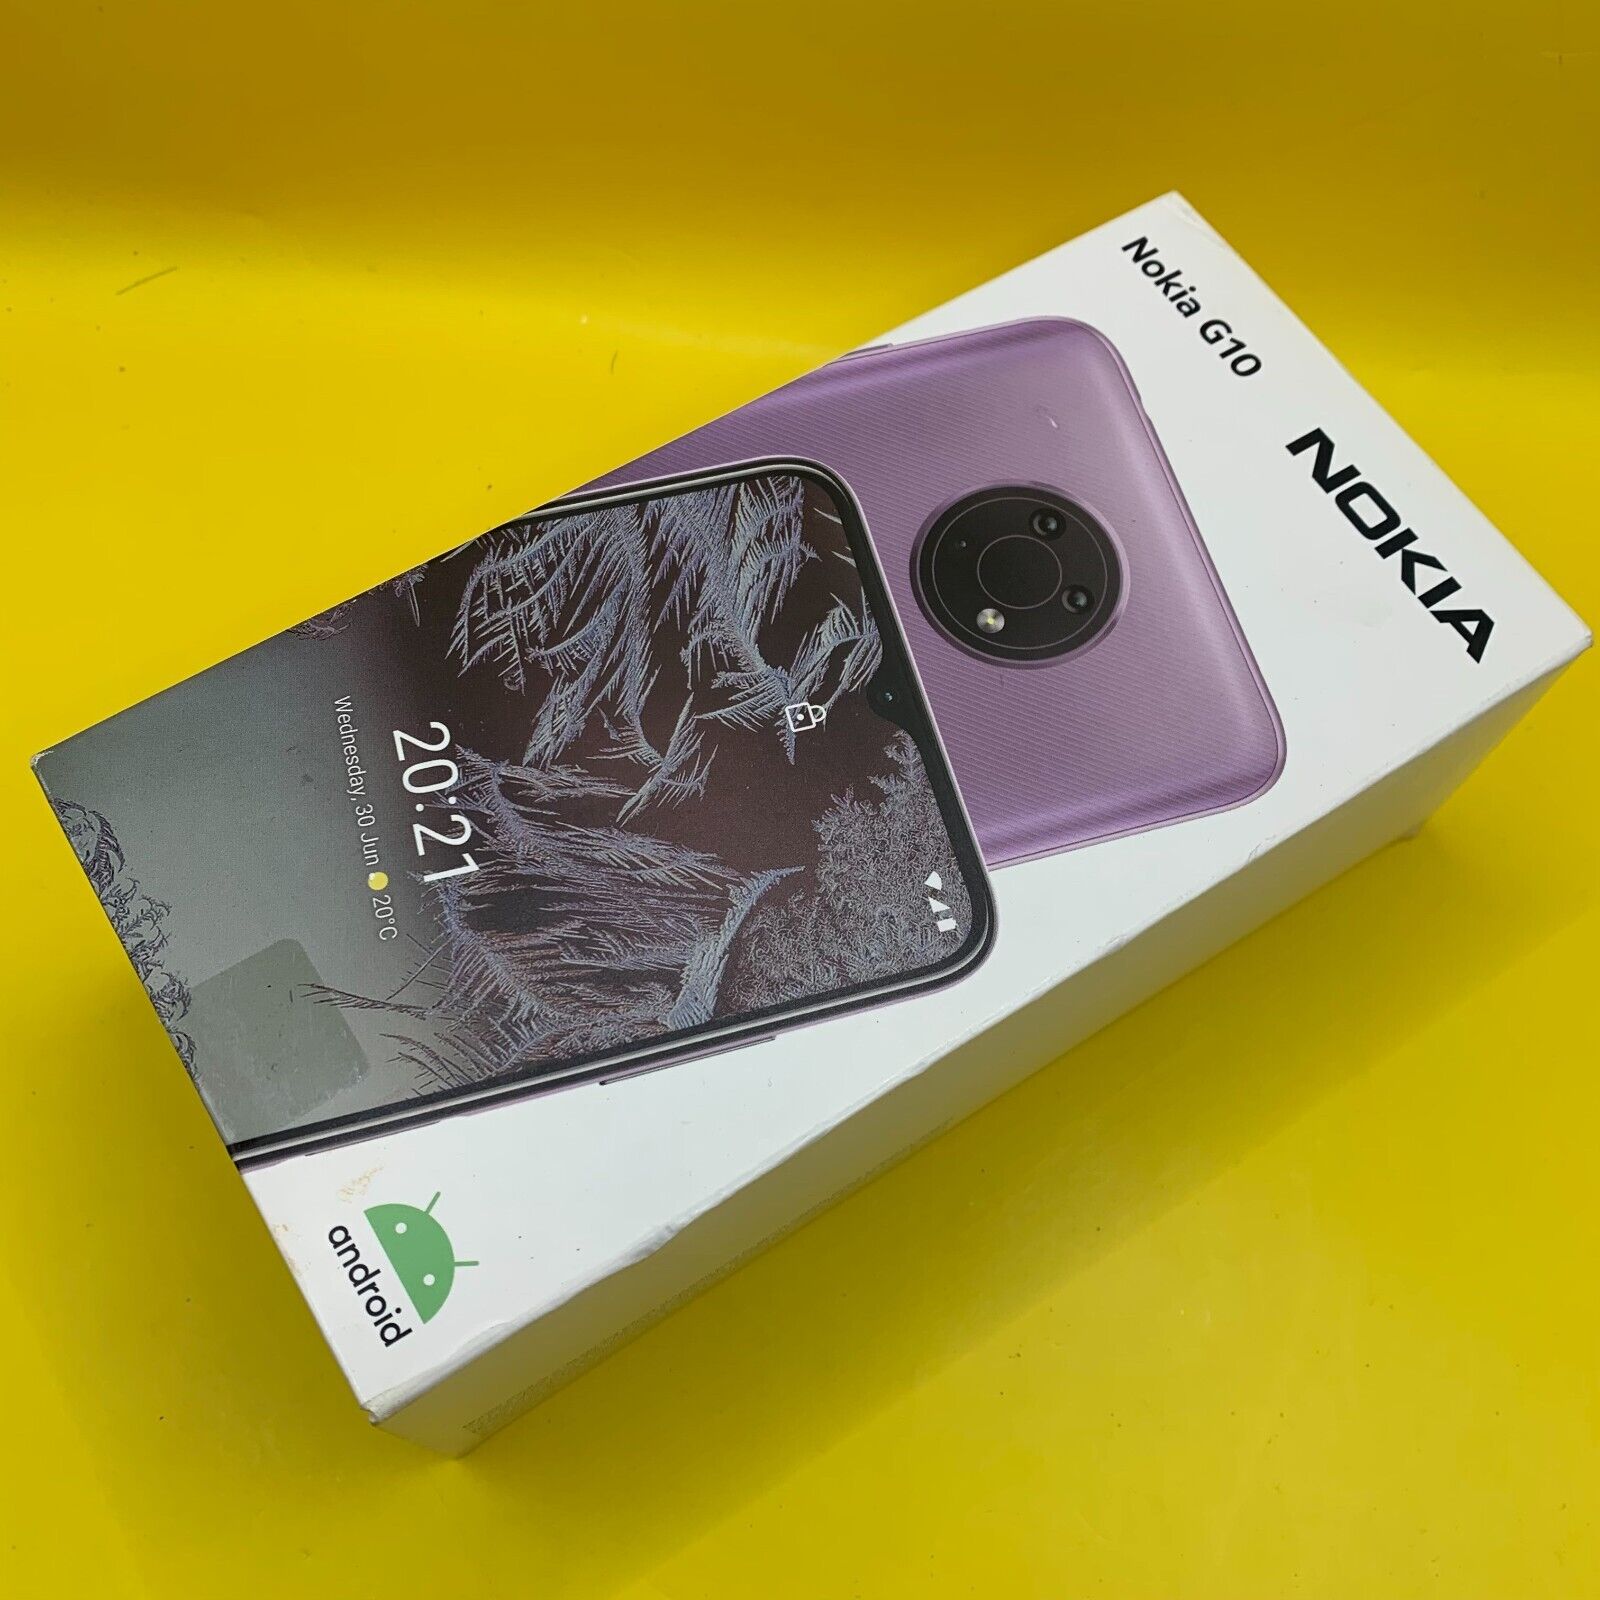 ⚡SHIPS SAME DAY⚡ Nokia G20 128GB Blue (Unlocked) (Dual SIM) [NEW IN BOX]